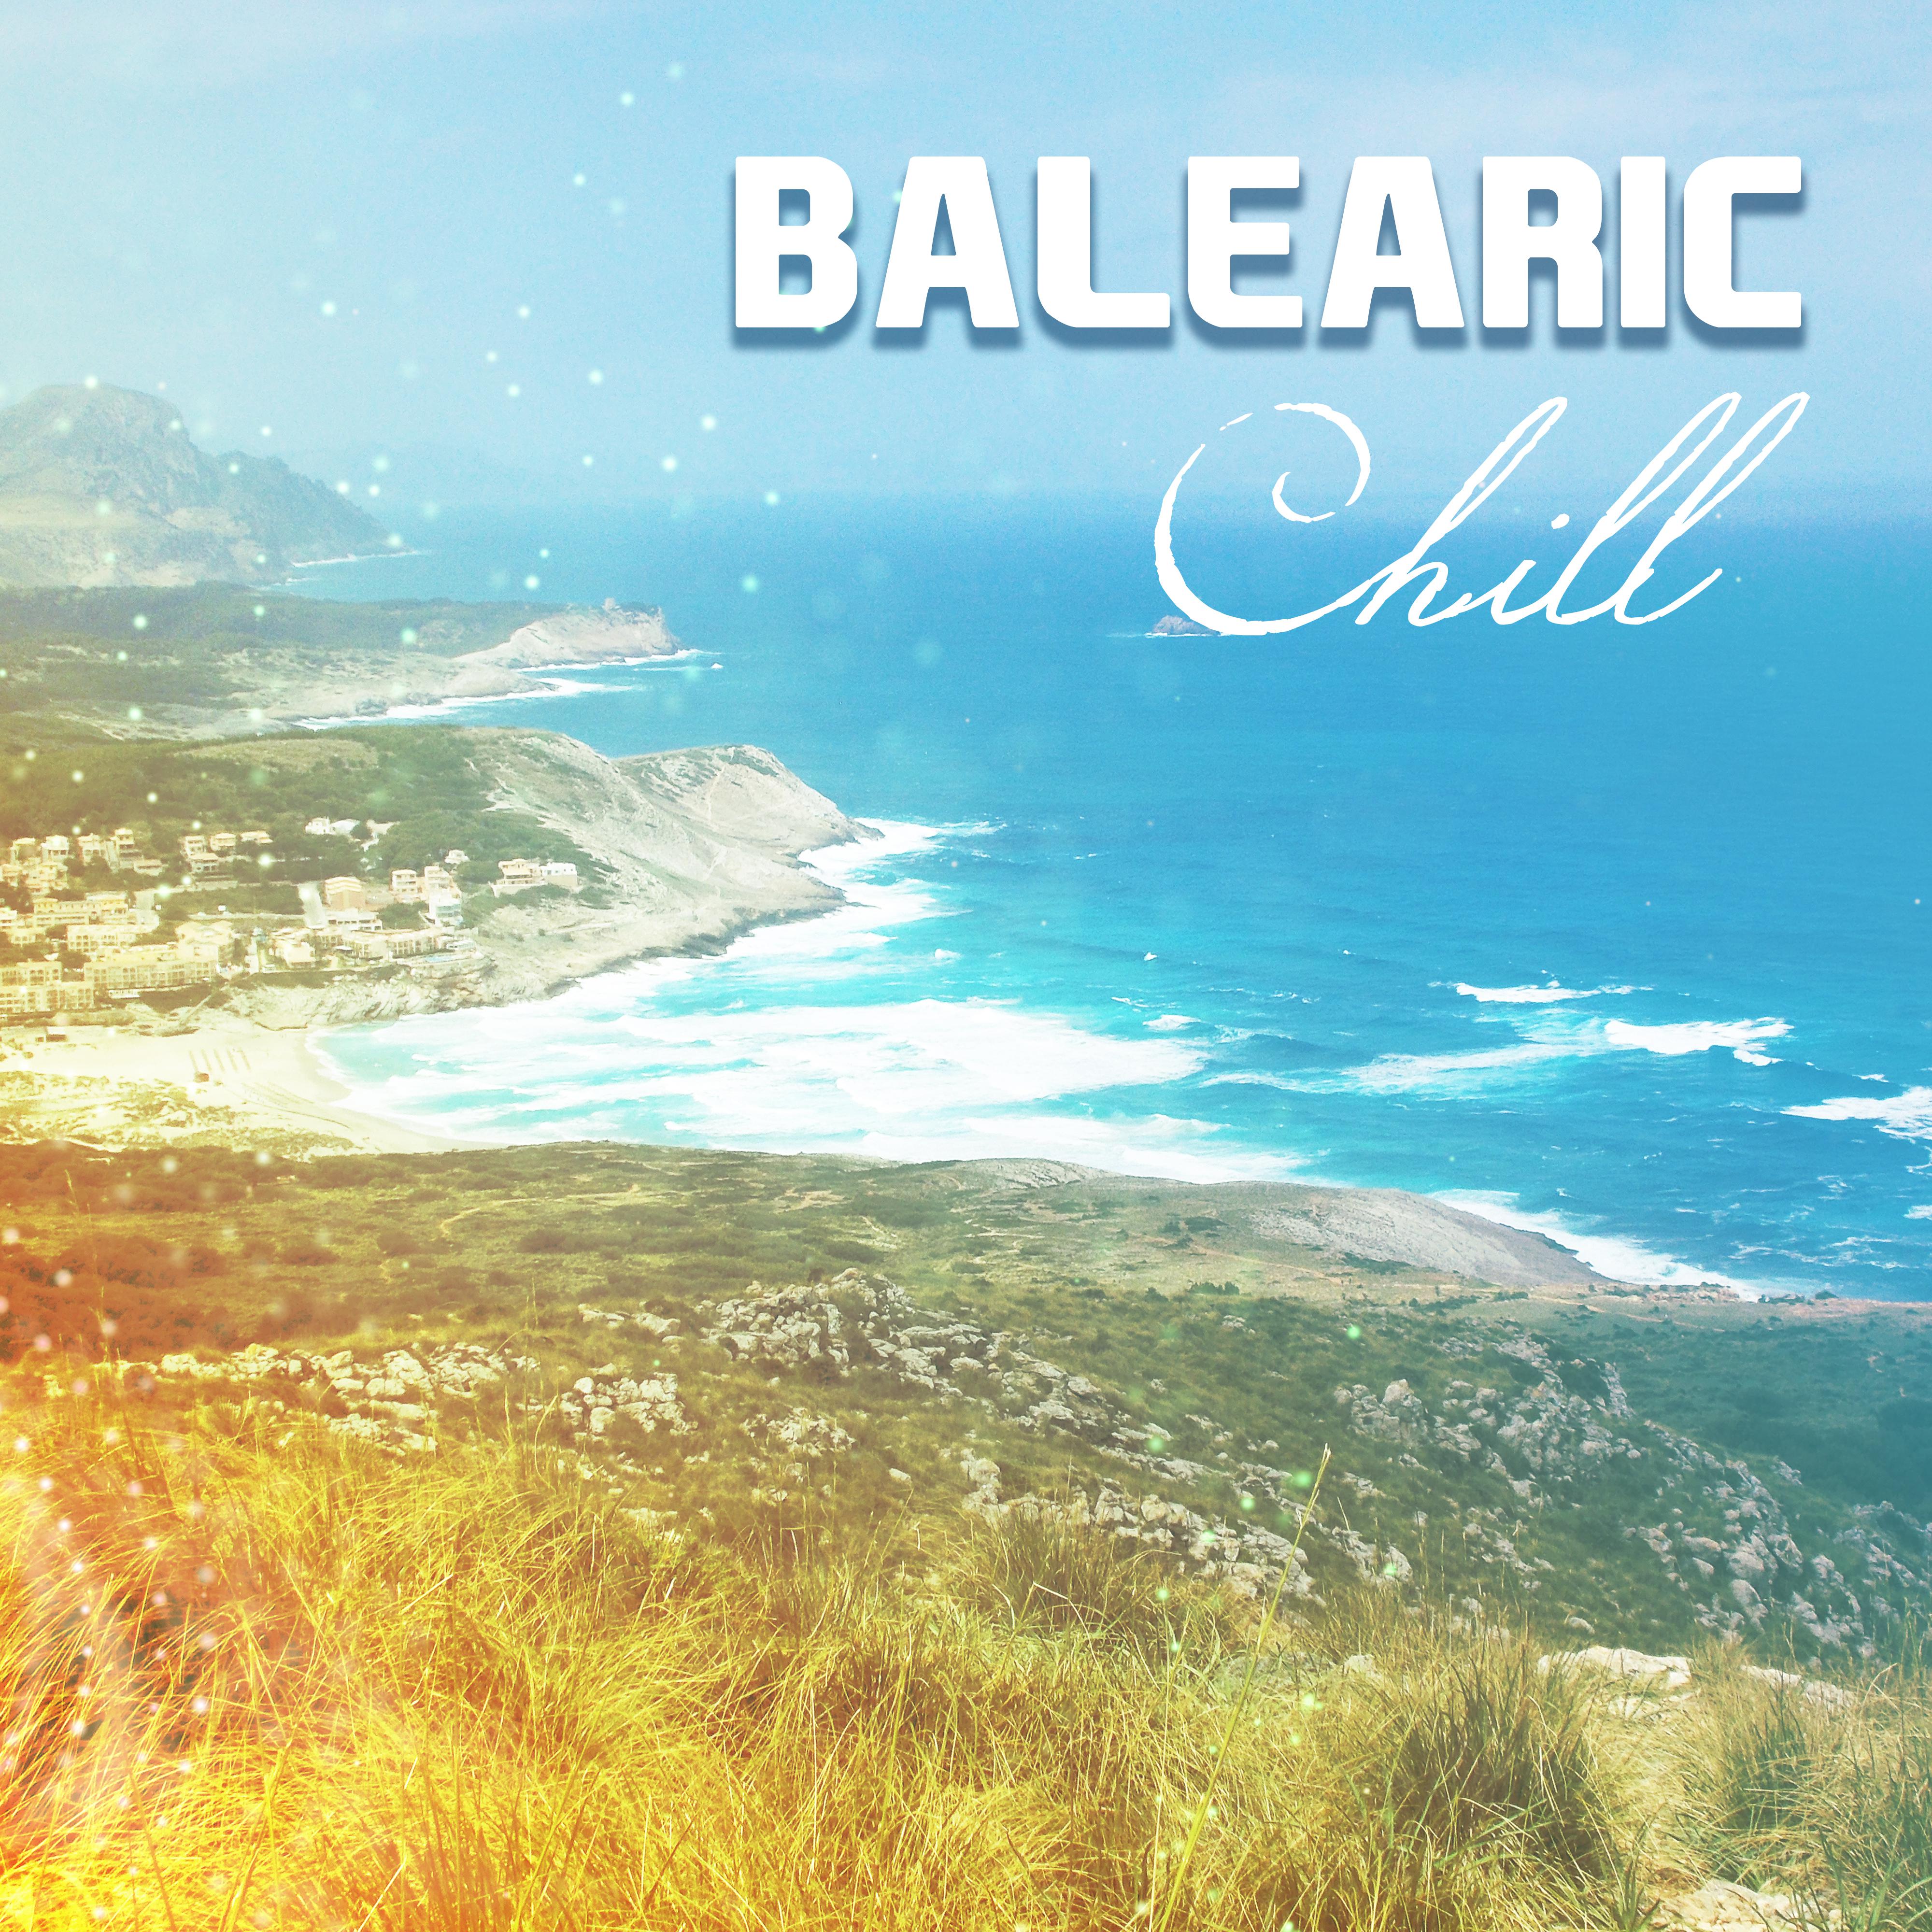 Balearic Chill  Ibiza Vibes, Hot Summer, Beach Chill, Total Relax, Ibiza 2017